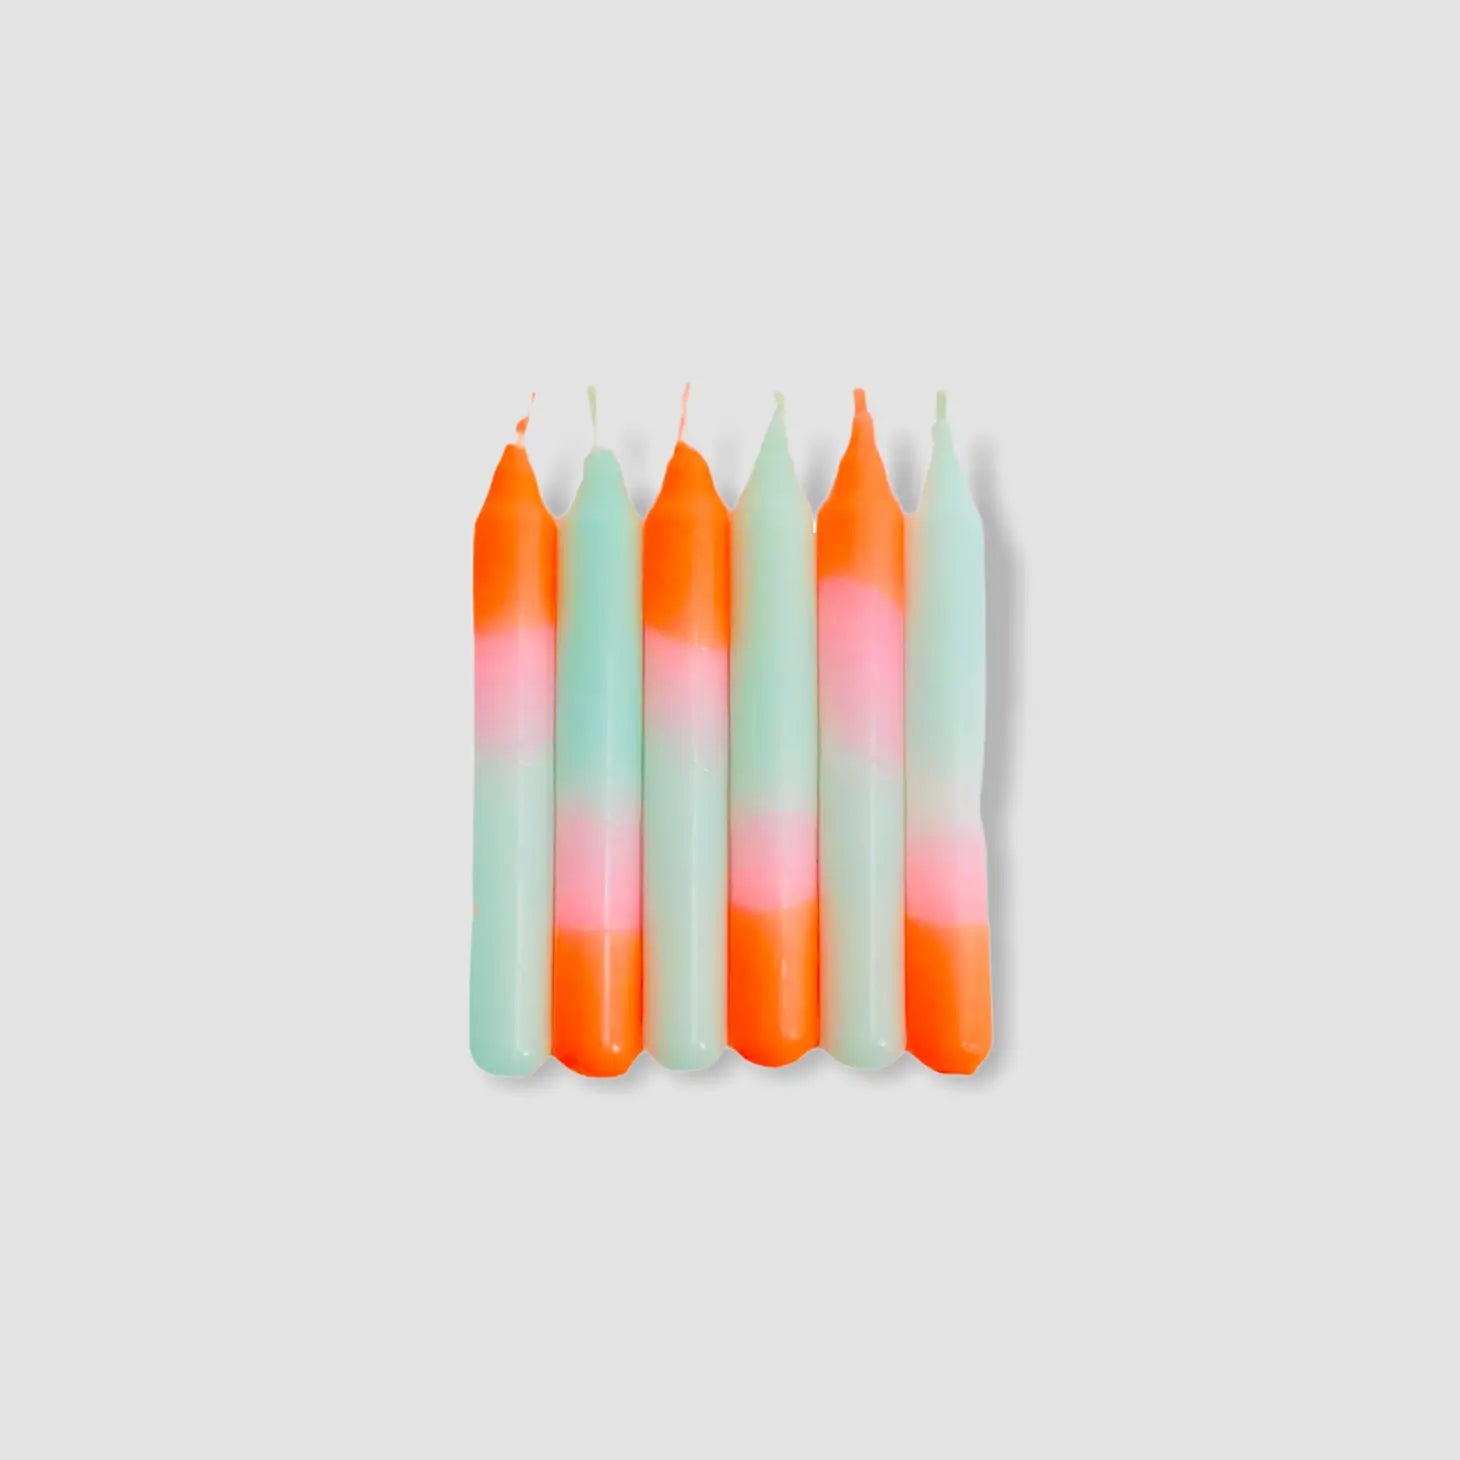 Sorbet Babies Dip Dye Confetti Short Candles - P I C N I C 